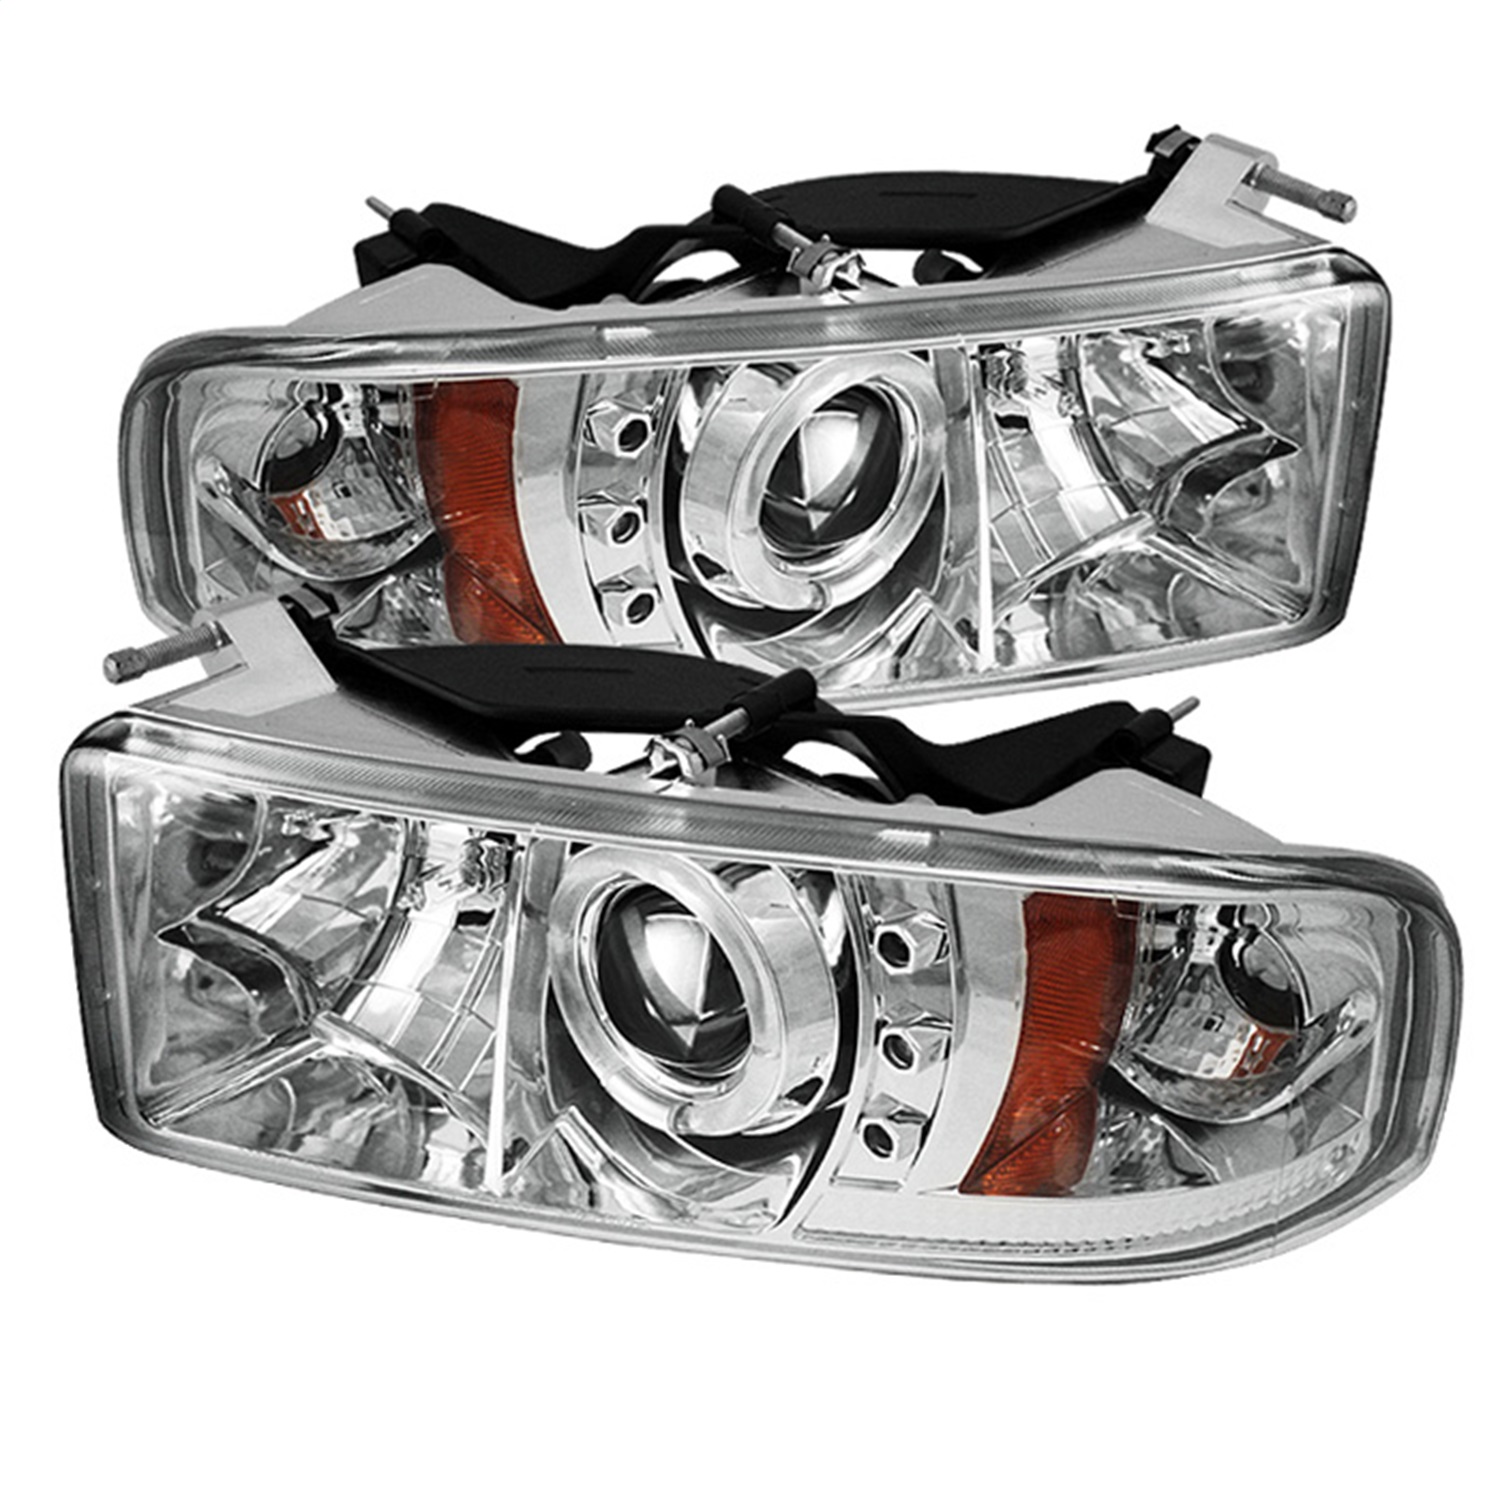 Spyder Auto 5010094 Halo LED Projector Headlights